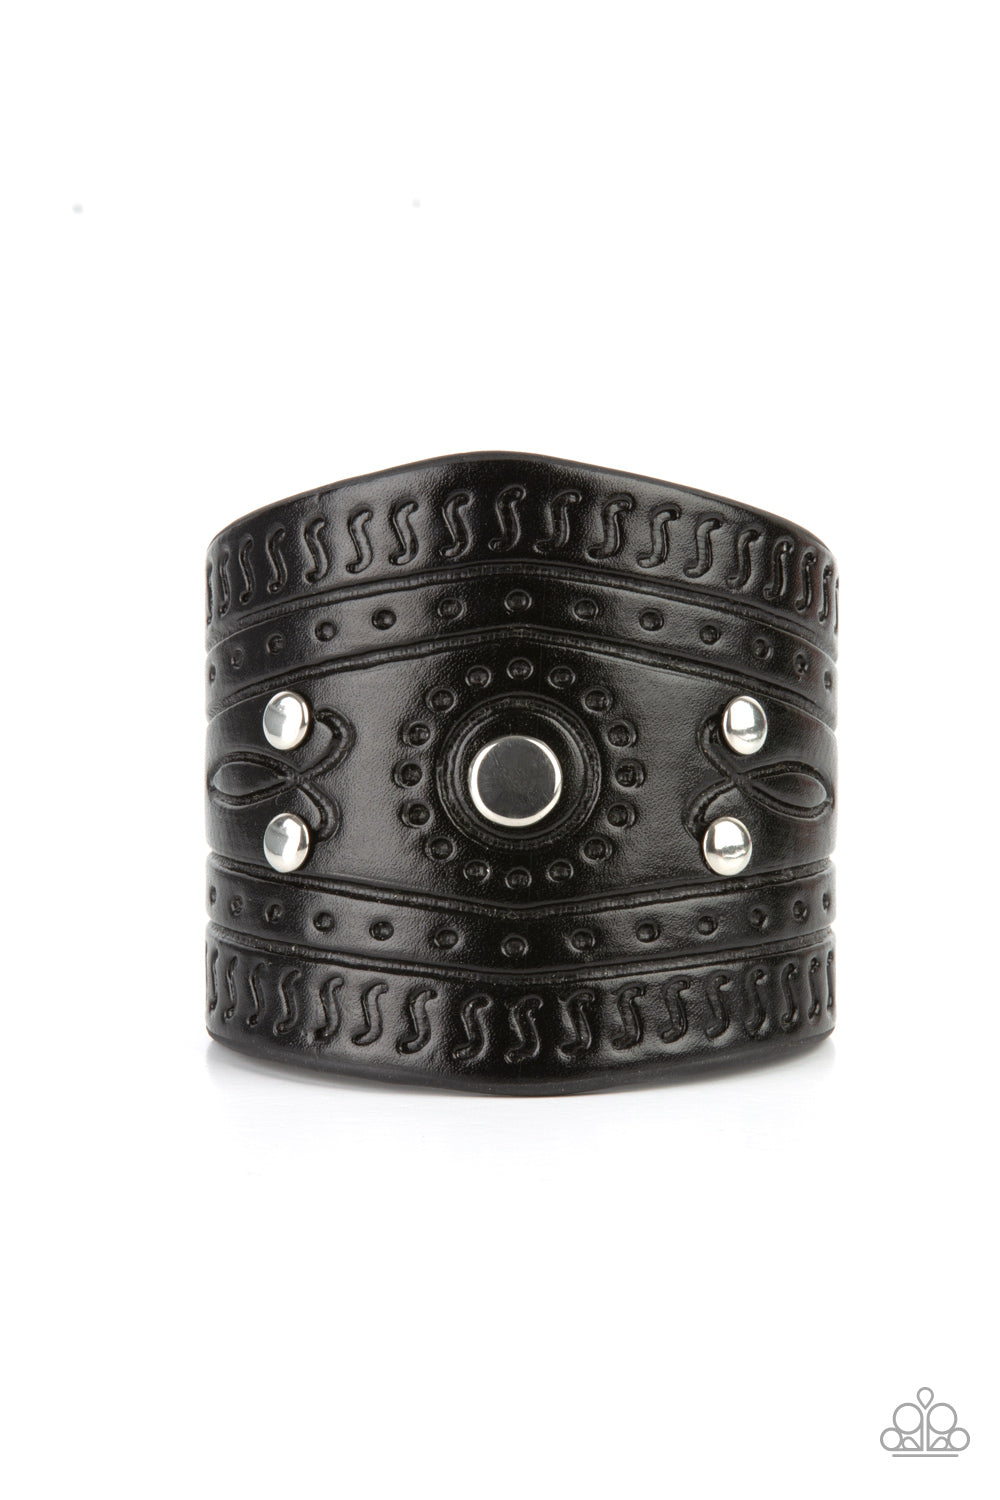 Paparazzi Accessories - Orange County #B551 - Black Bracelet